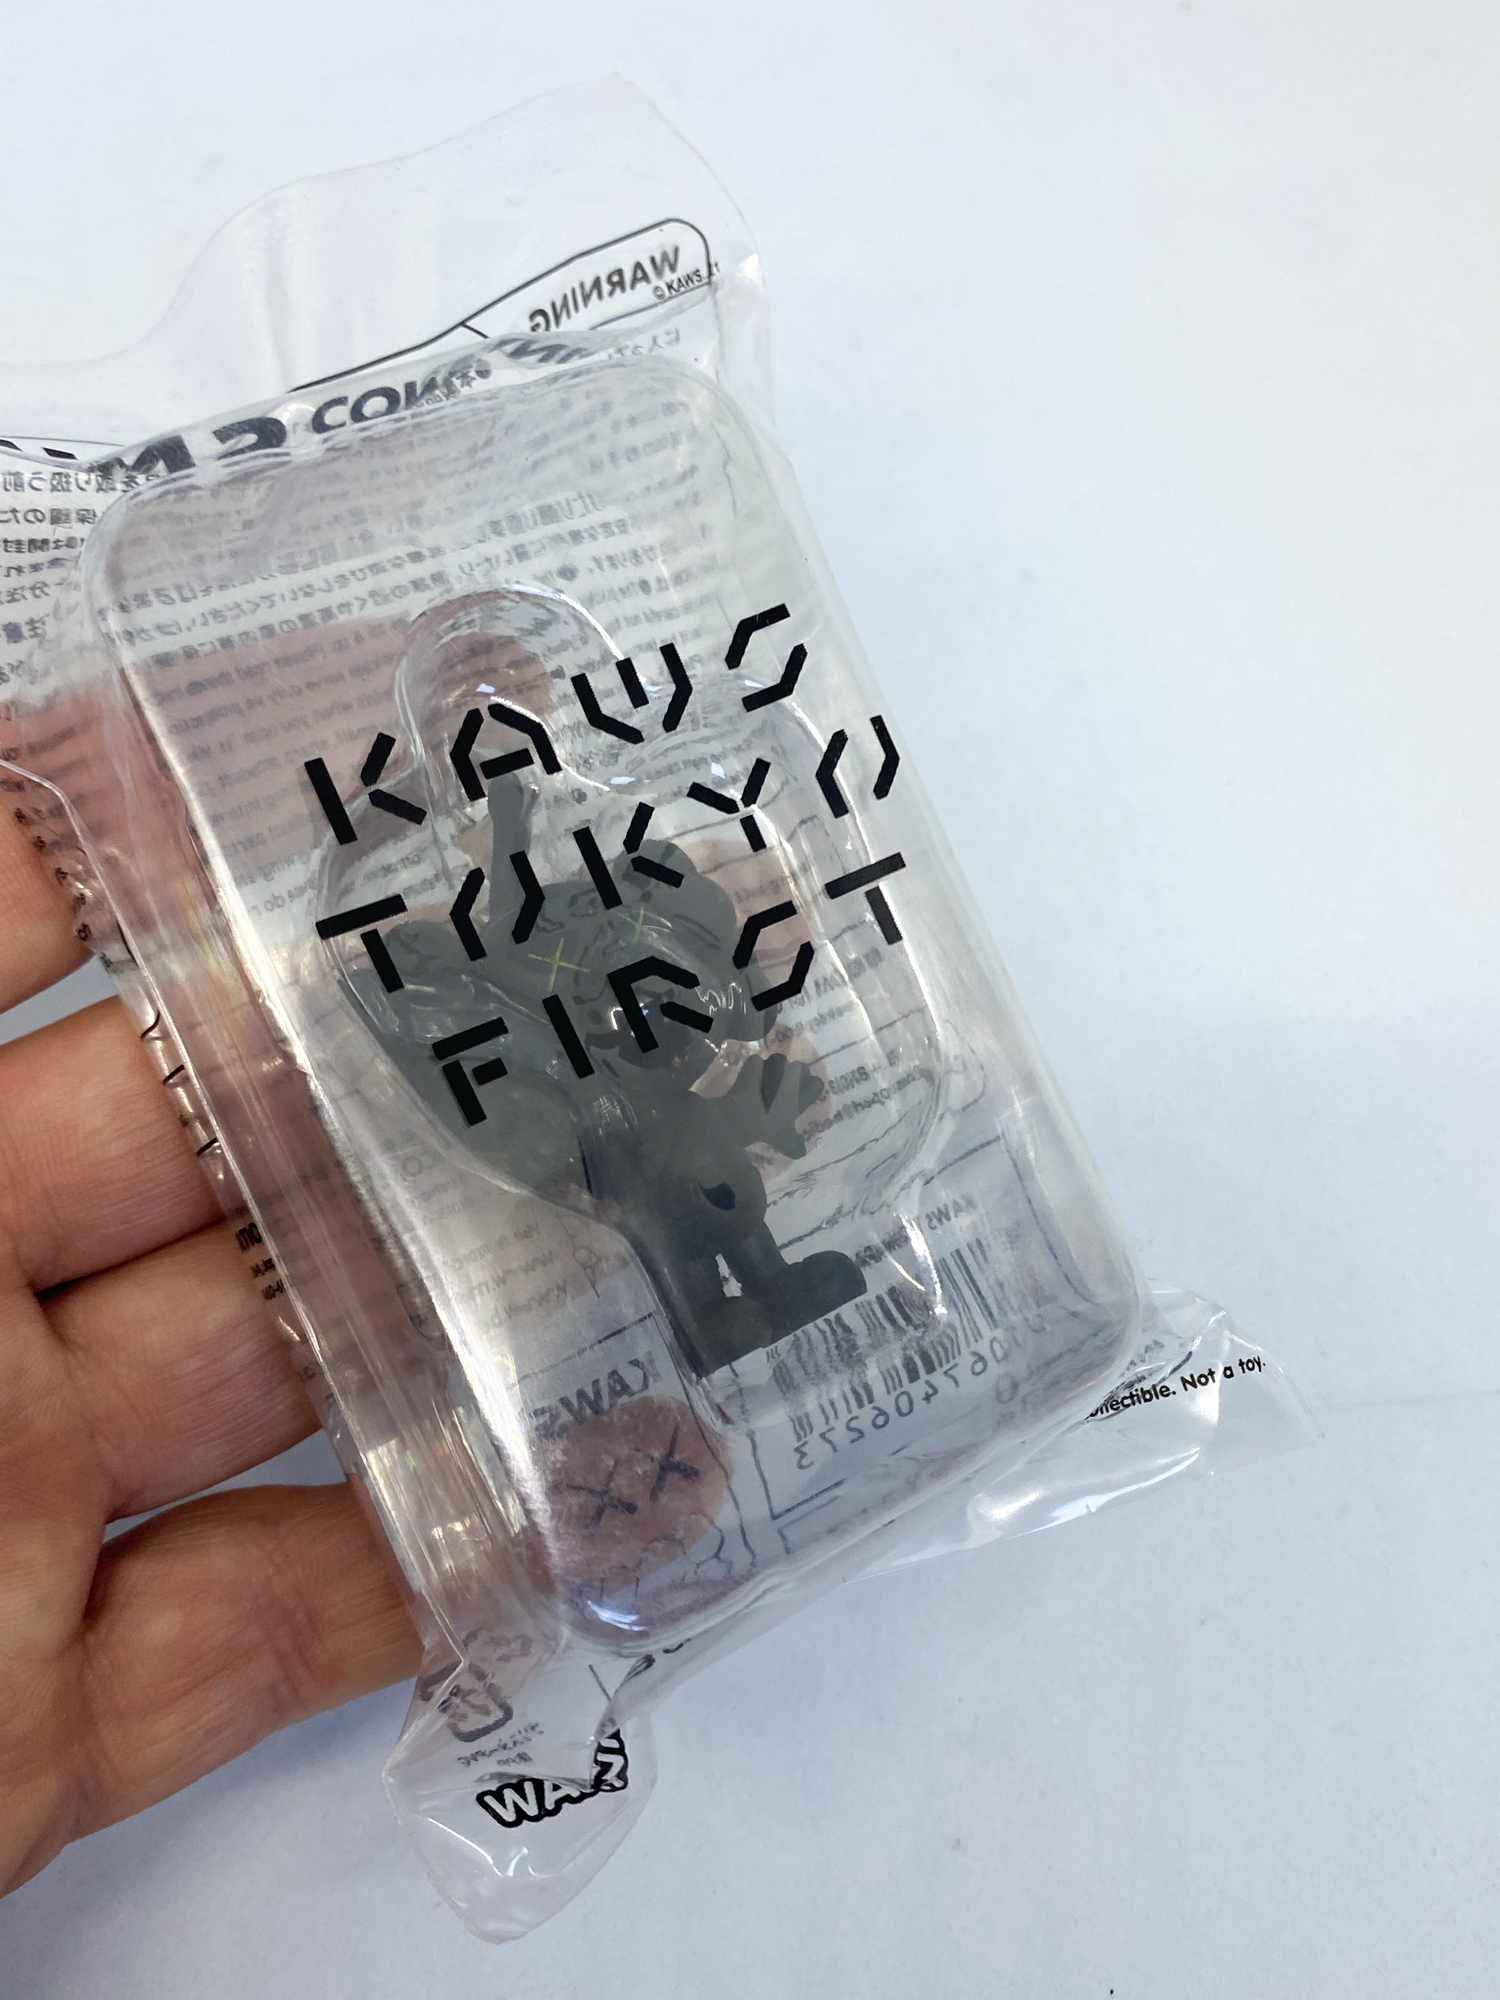 KAWS Tokyo First First Companion/Accomplice/JPP/Chum Keychain Set